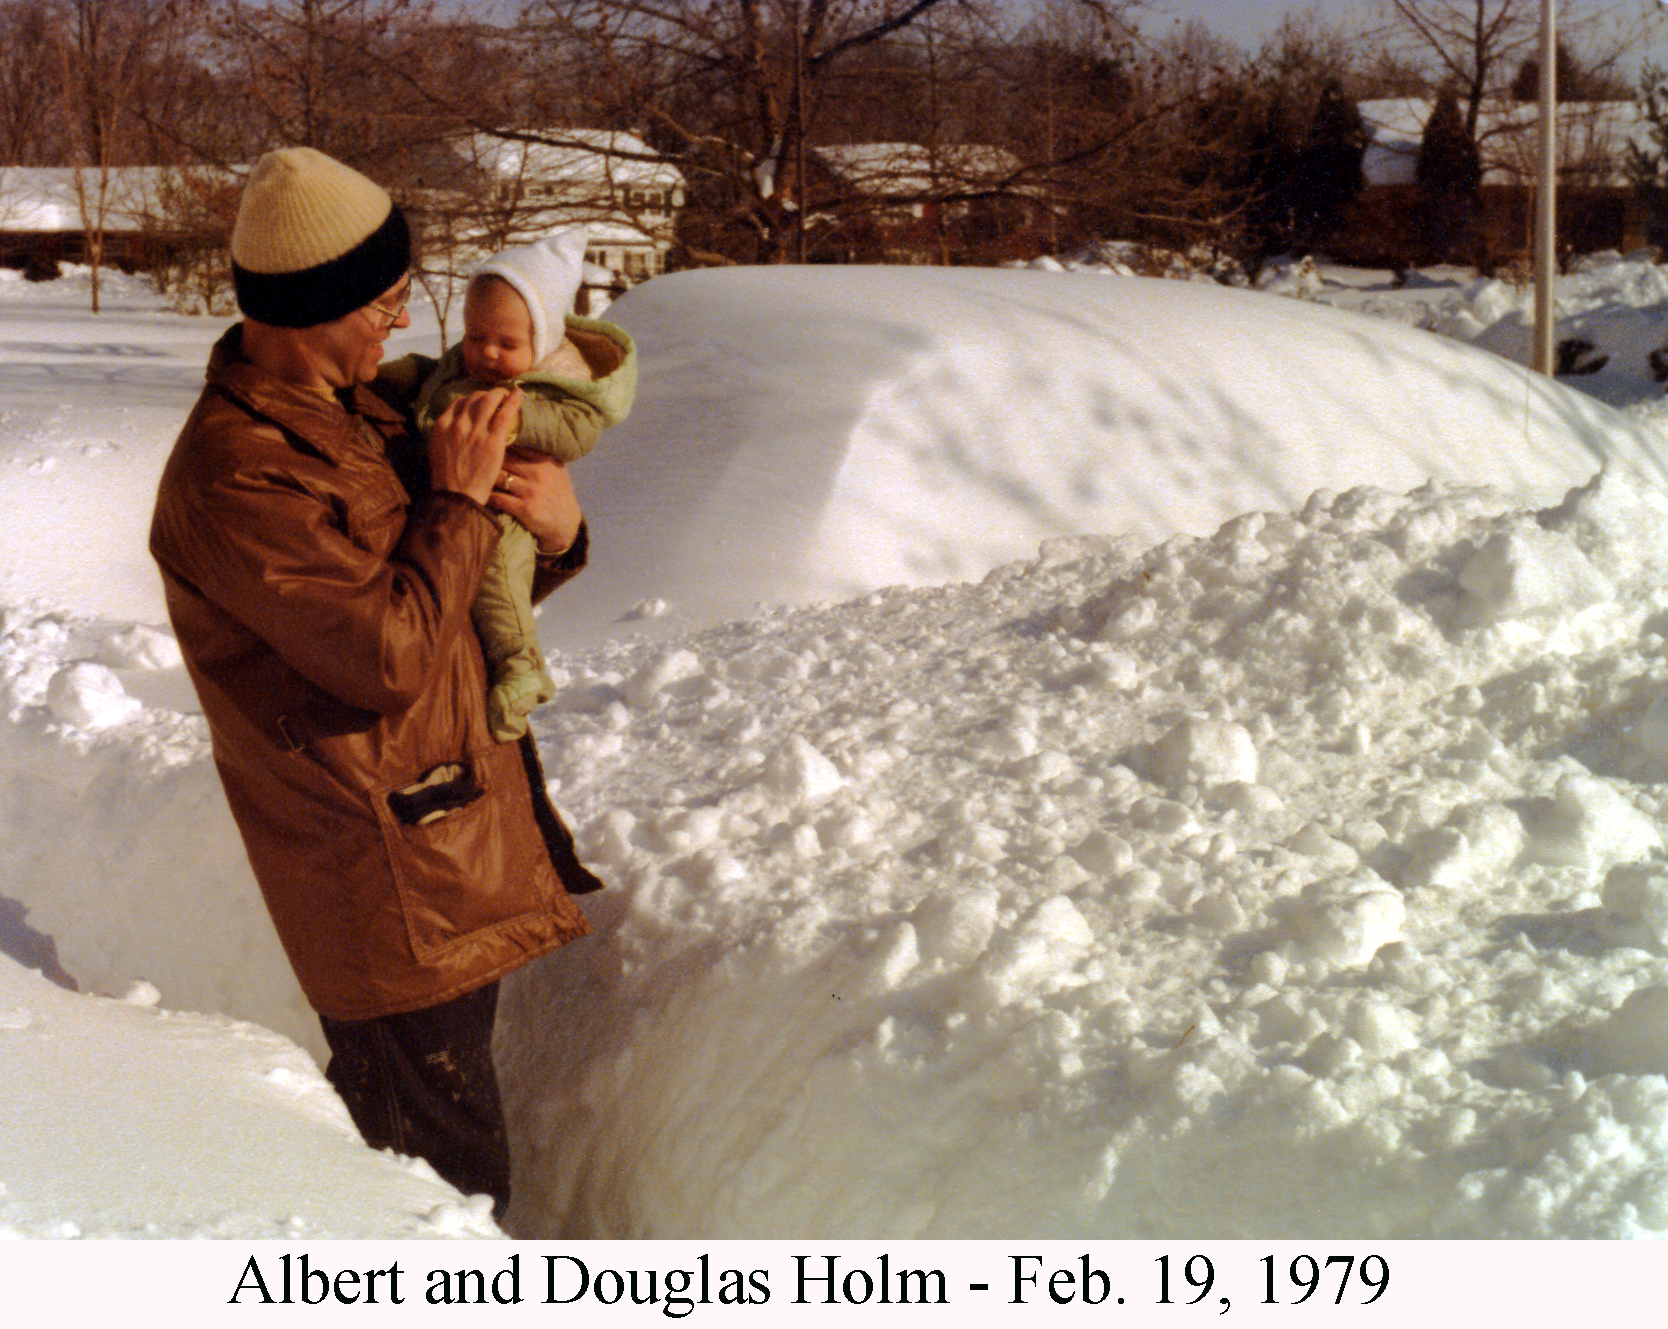 Albert Holm holding Douglas after the 1979 Washington’s Birthday deep snow